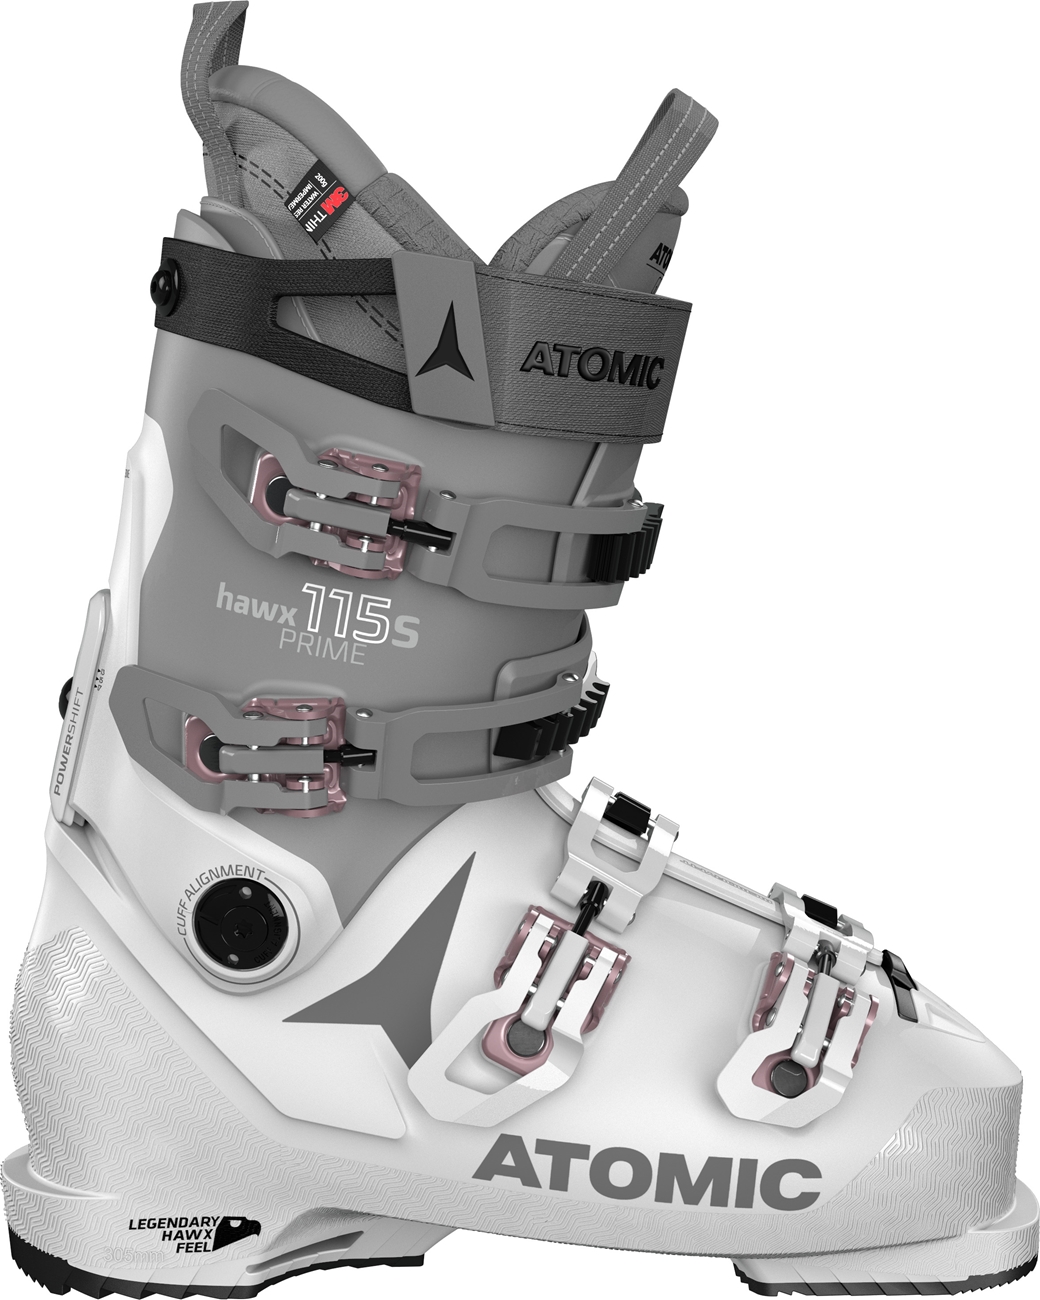 ATOMIC Hawx Prime 115 S Damen Skischuhe 2020/21